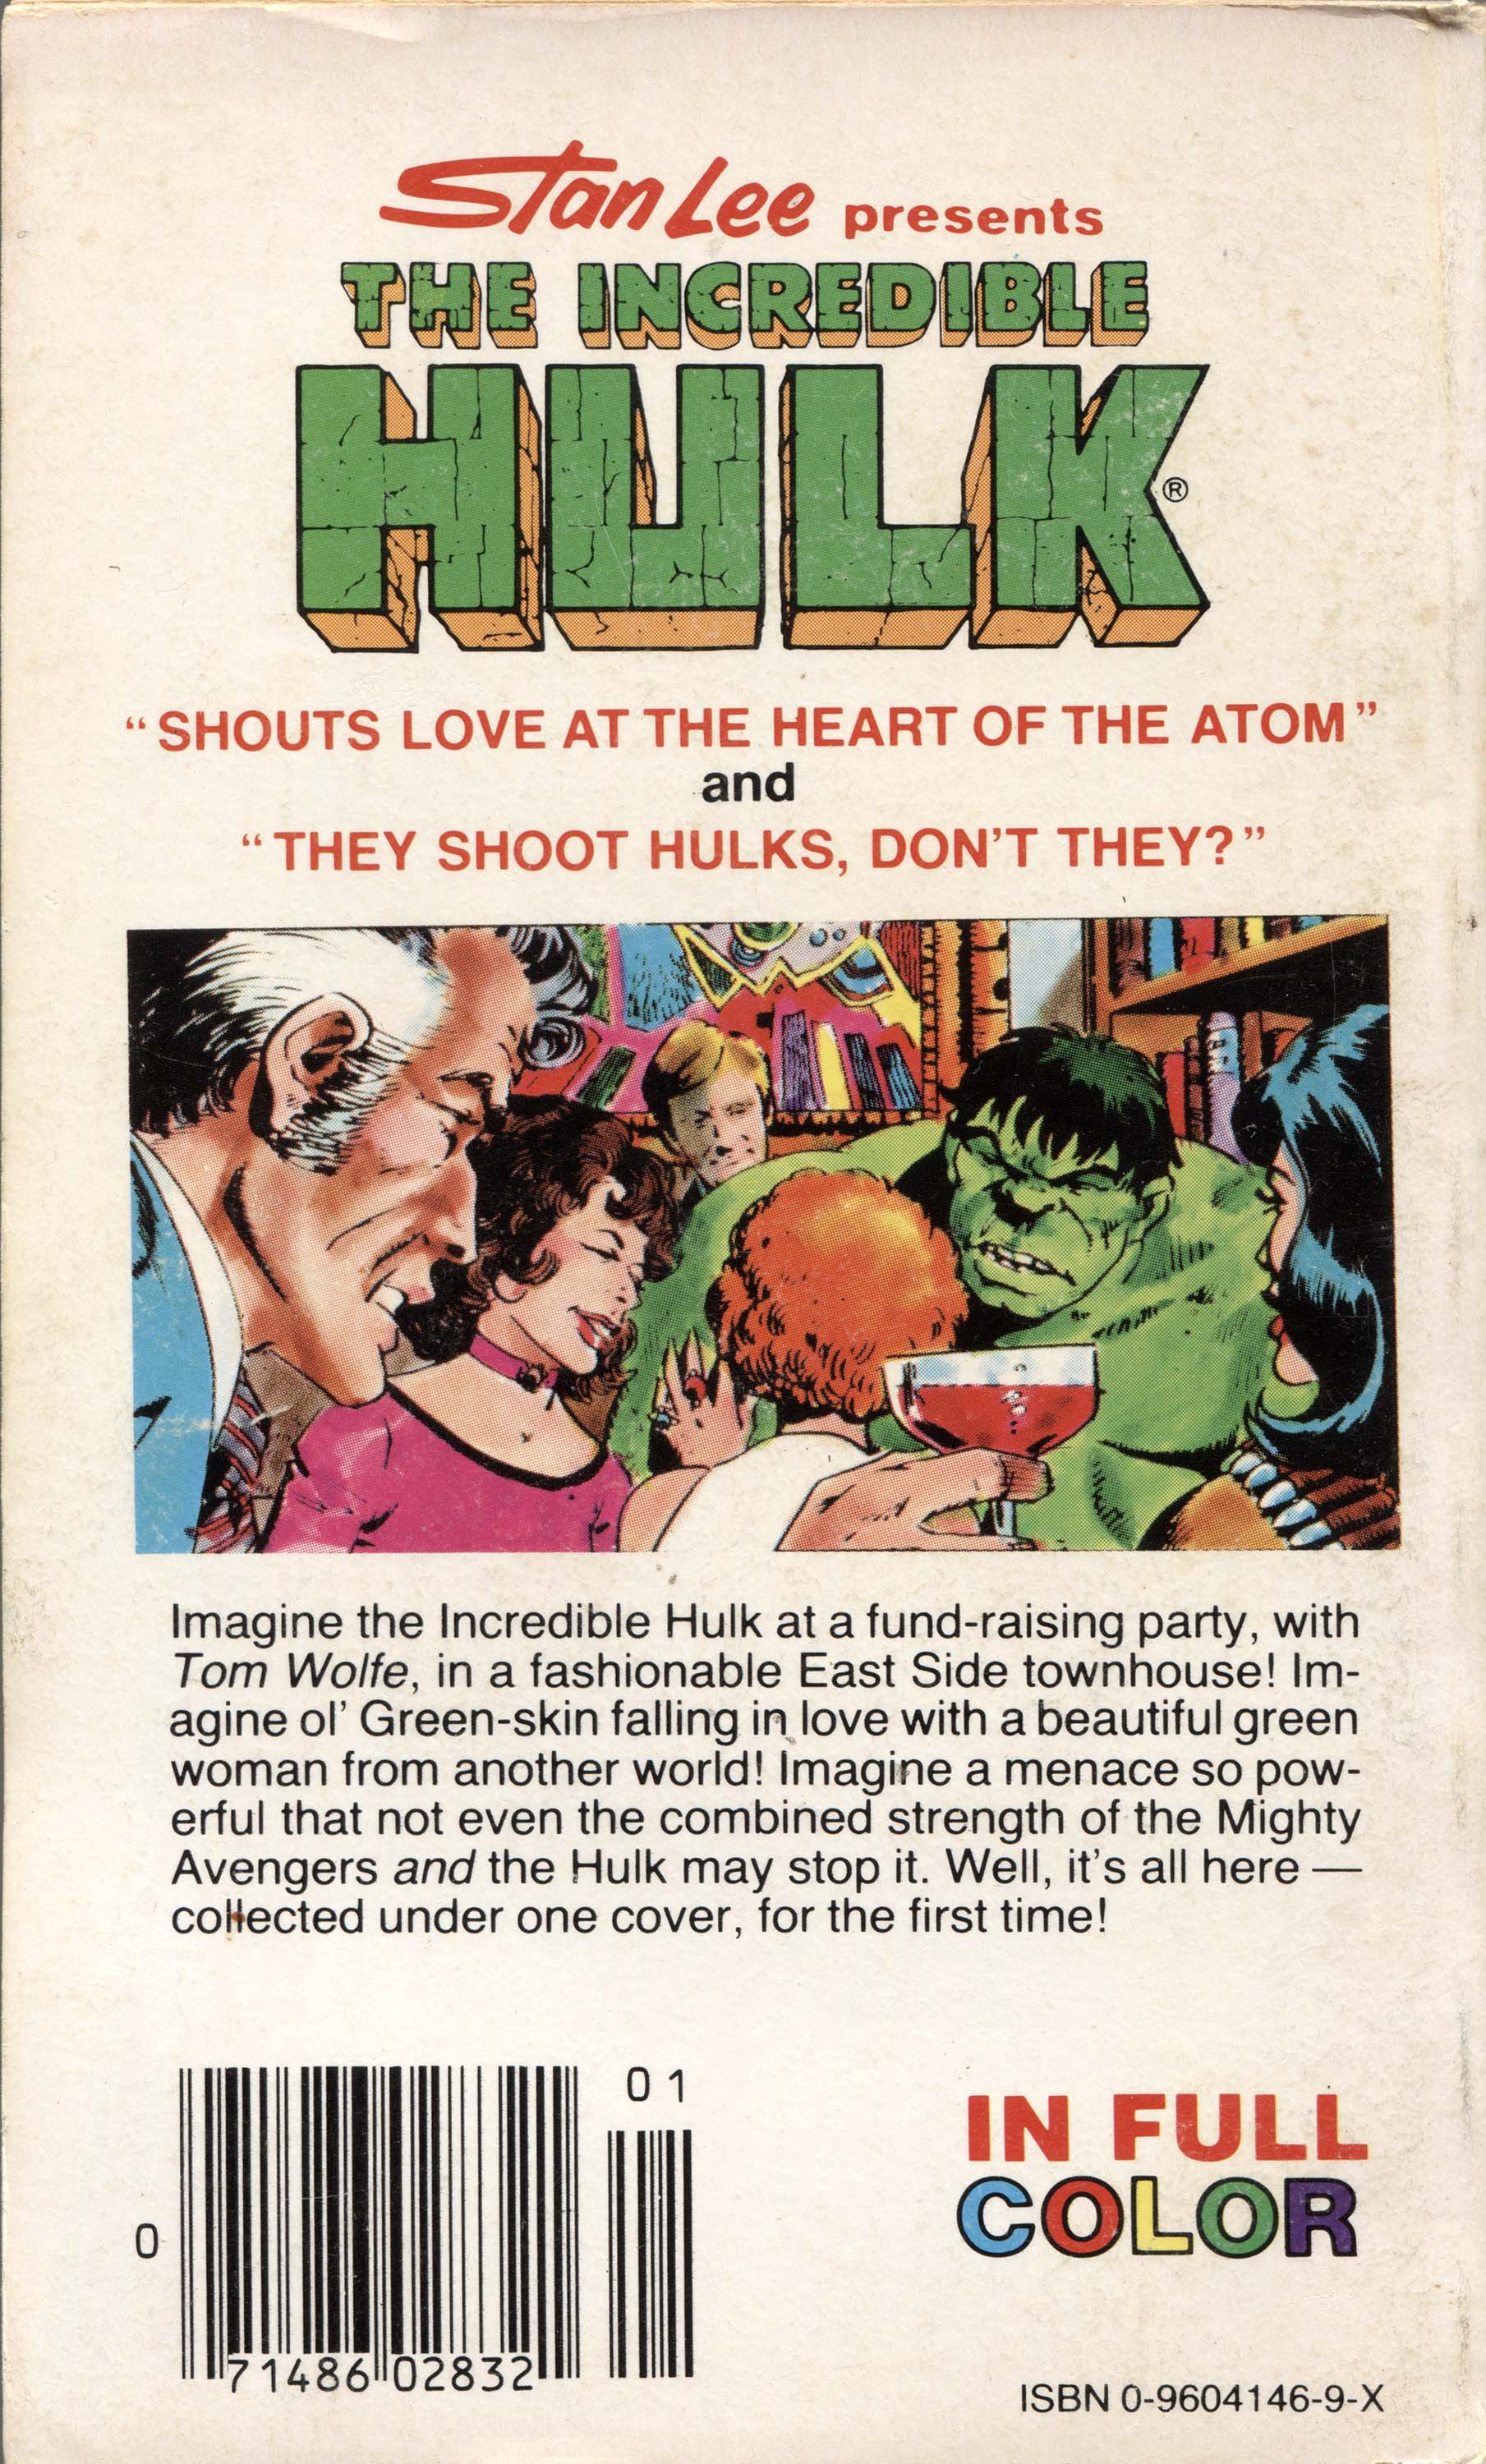 Hulk Illustrated Book, p55, art by Herb Trimpe & John Severin